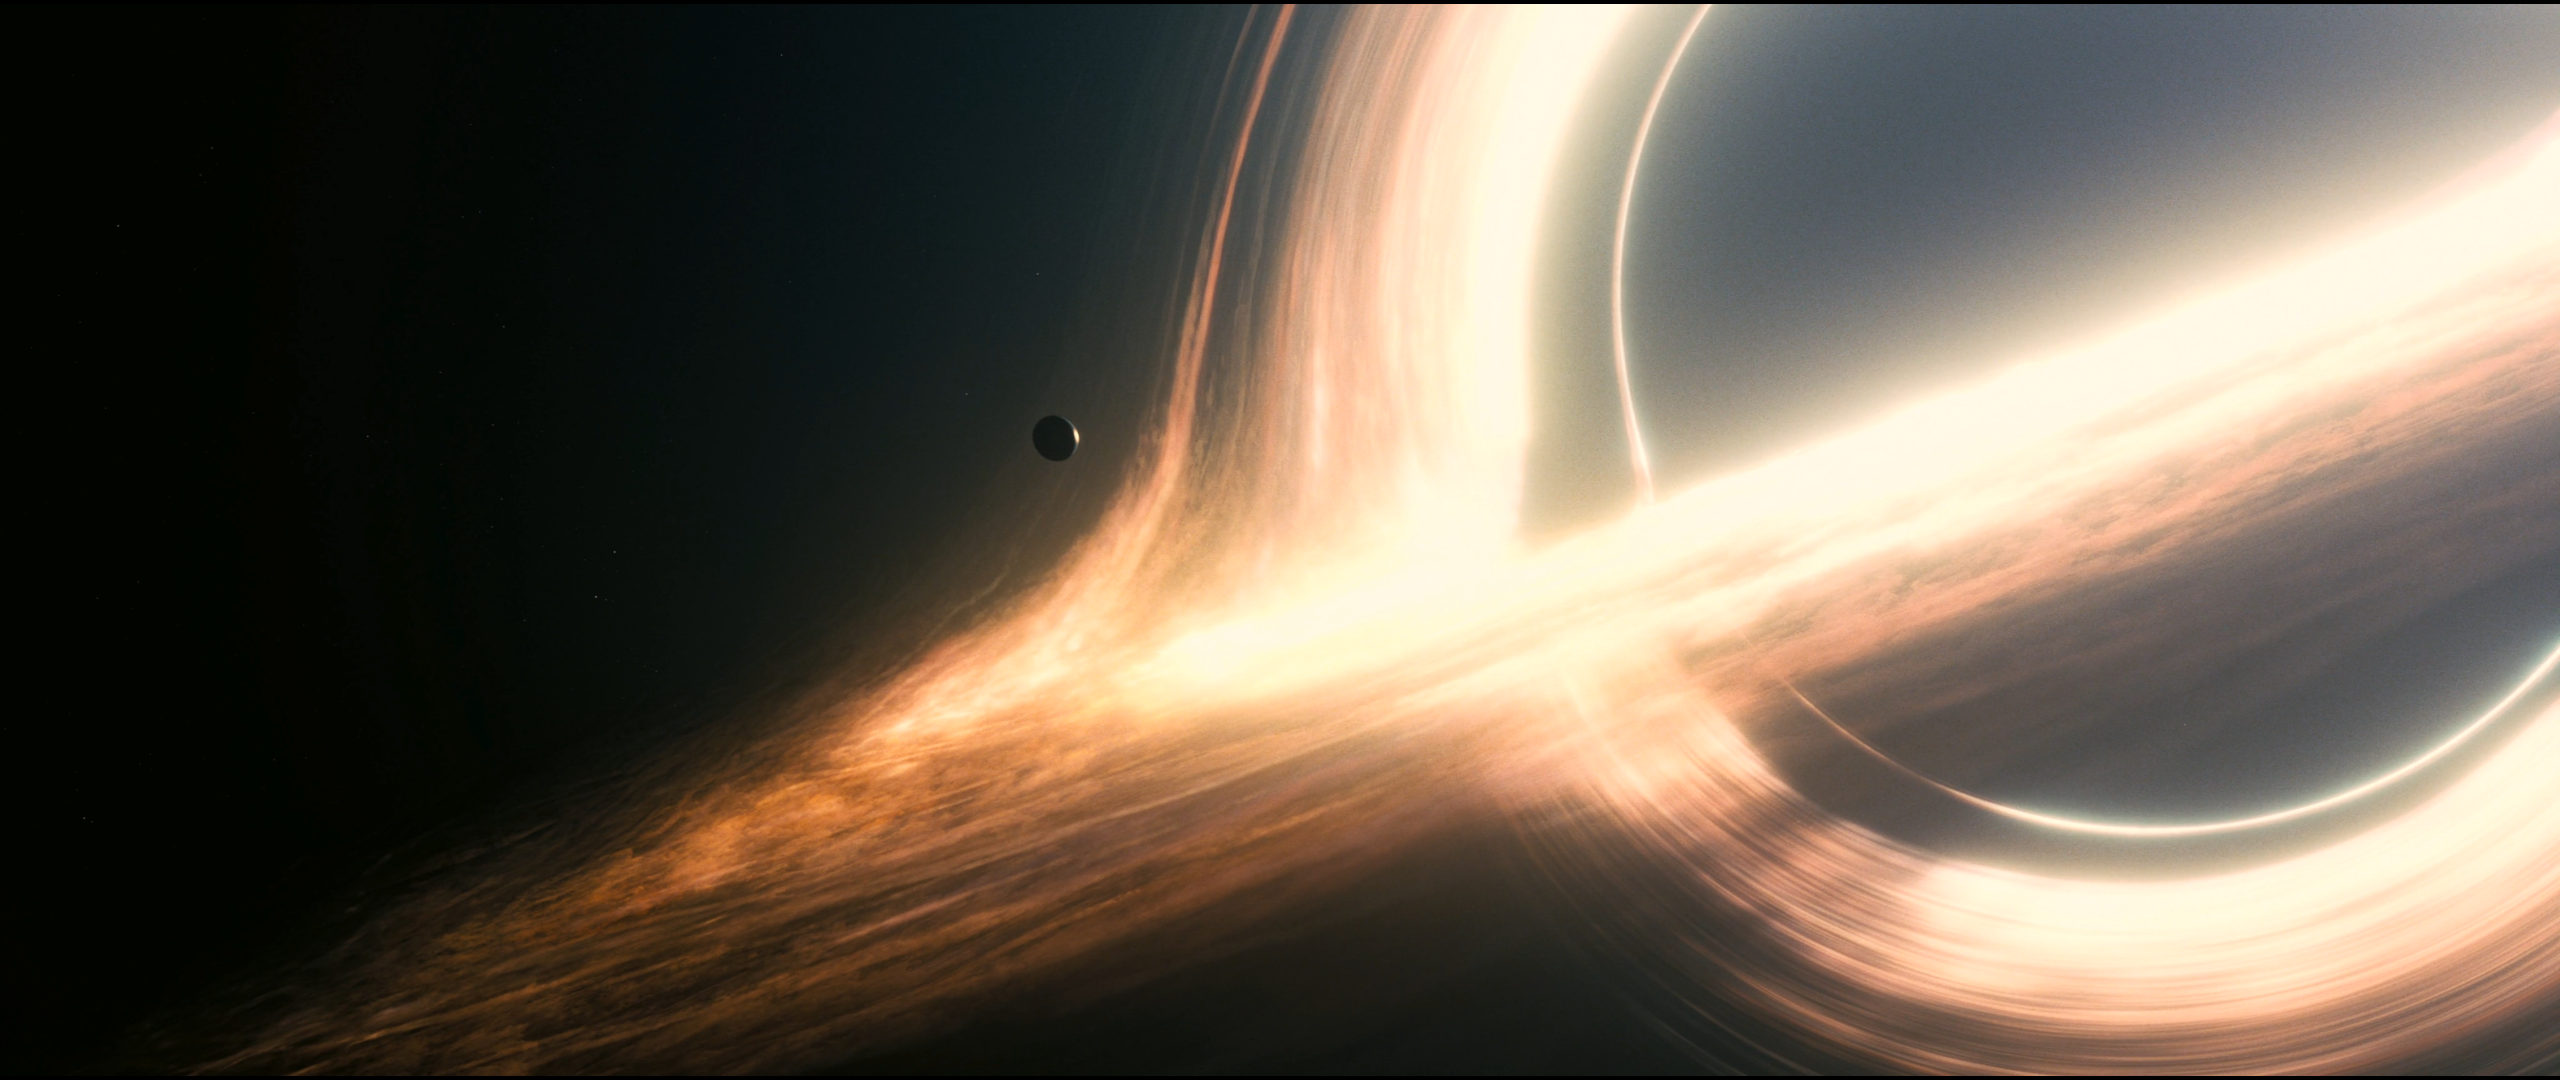 DeviantArt: More Like Interstellar Blackhole 2 Wallpaper (2560 x ...